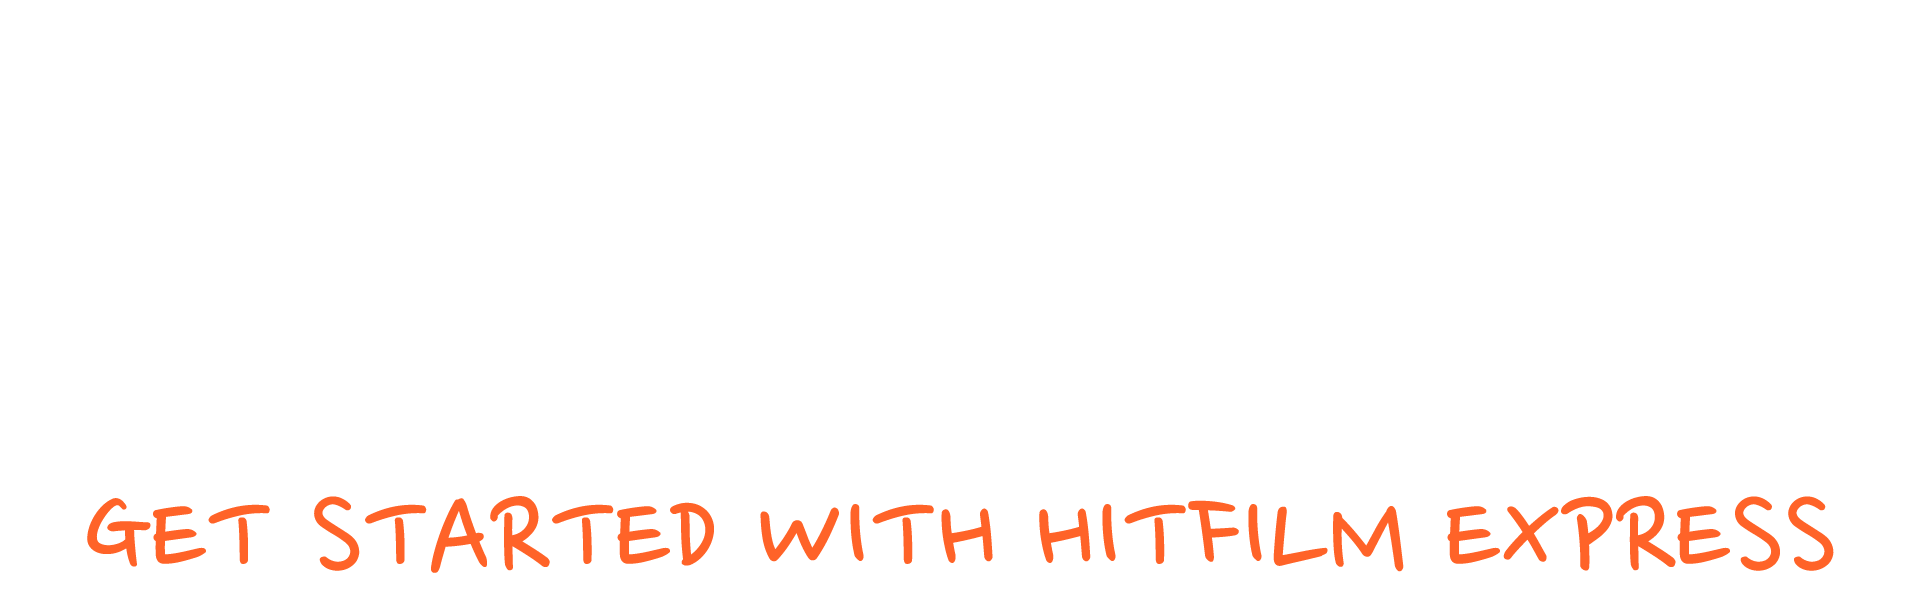 HitFilm Basics - get started with HitFilm Express